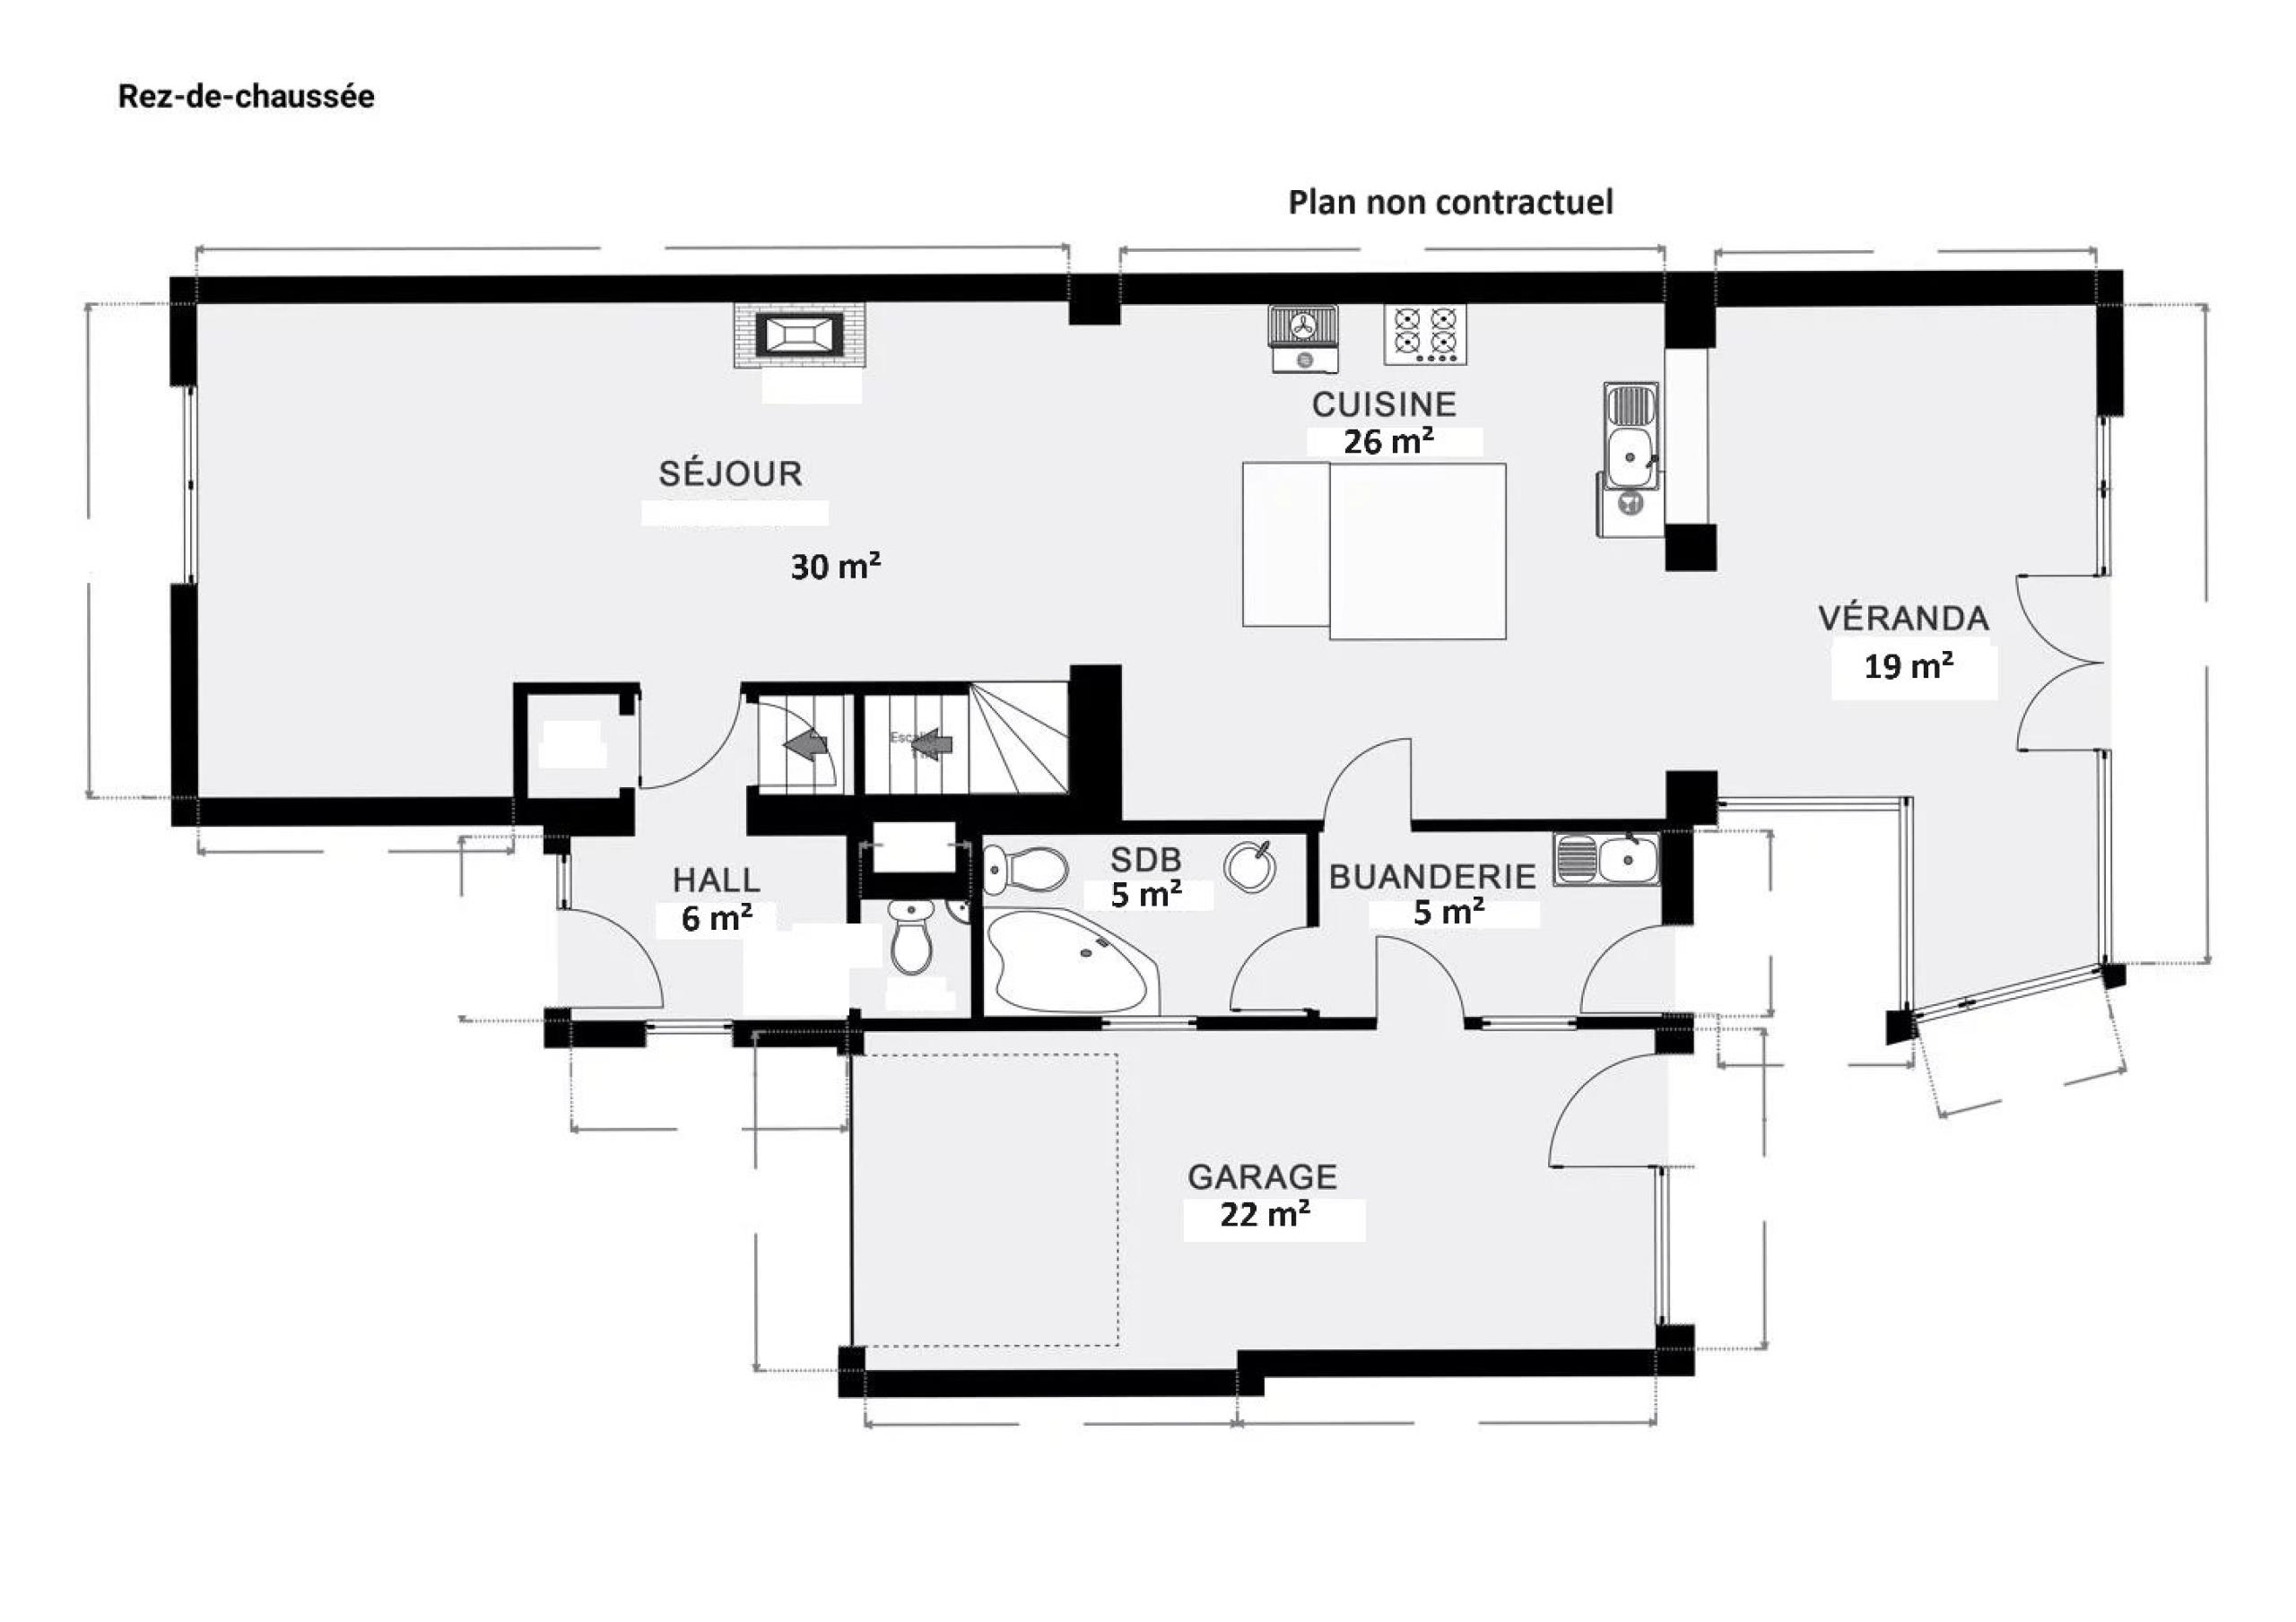 Maison semi mitoyenne 3/4 chambres, jardin, garage, parking